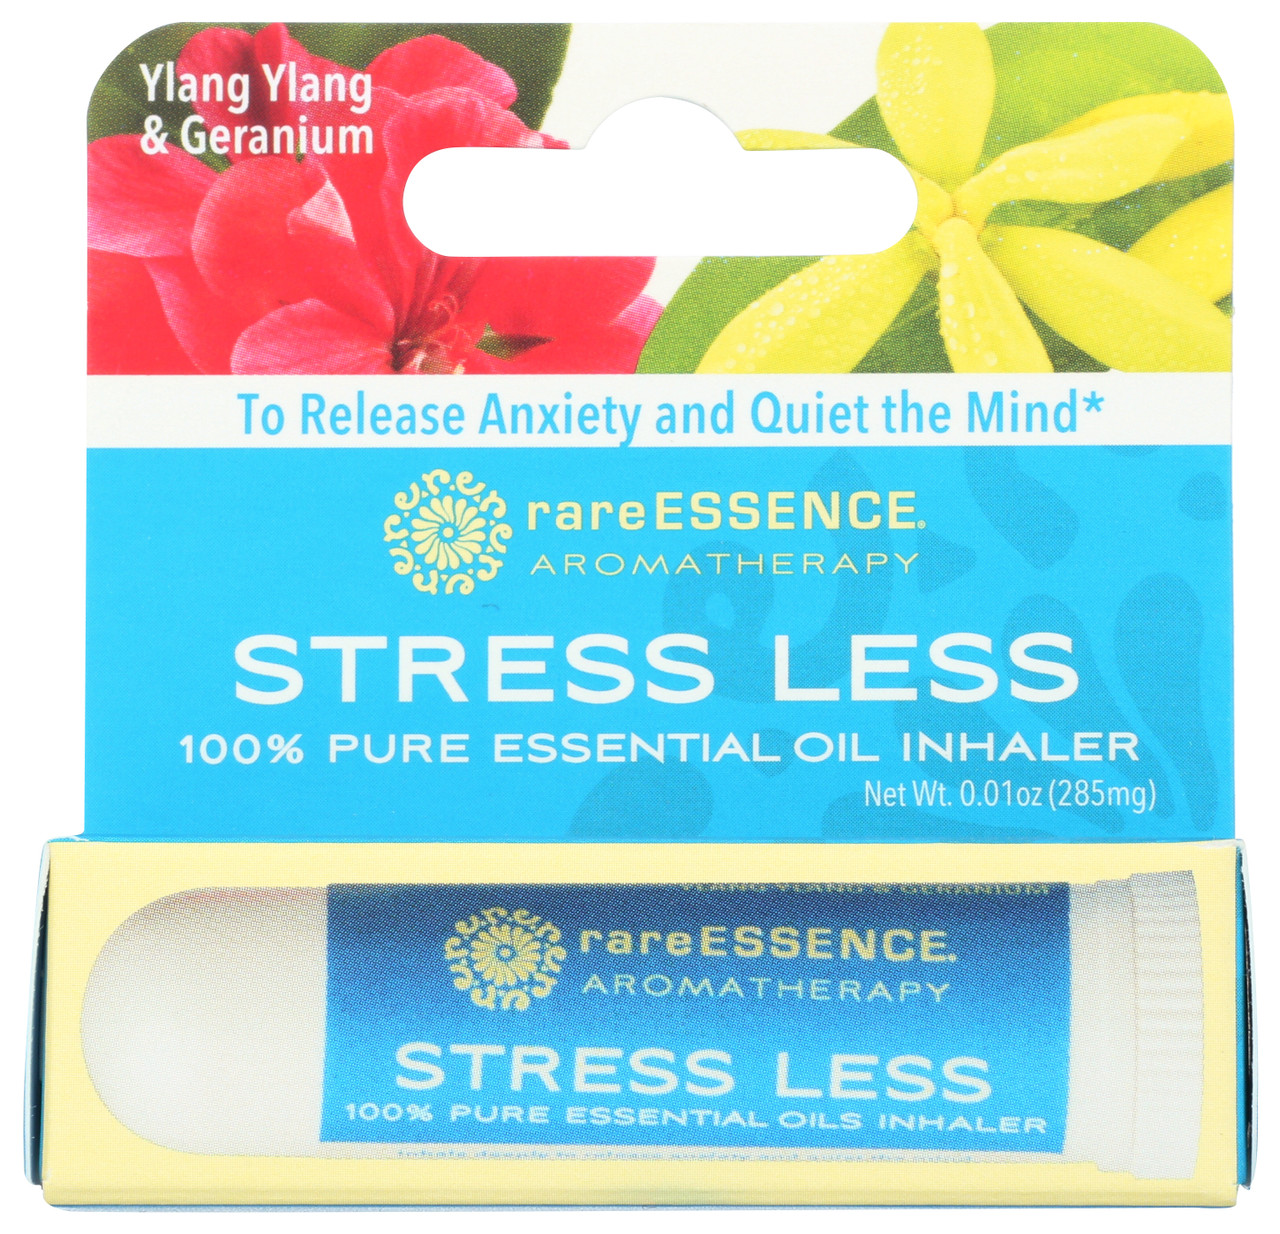 Stress Less Aromatherapy Inhaler Ylang Ylang & Geranium Essential Oil Inhaler .01oz